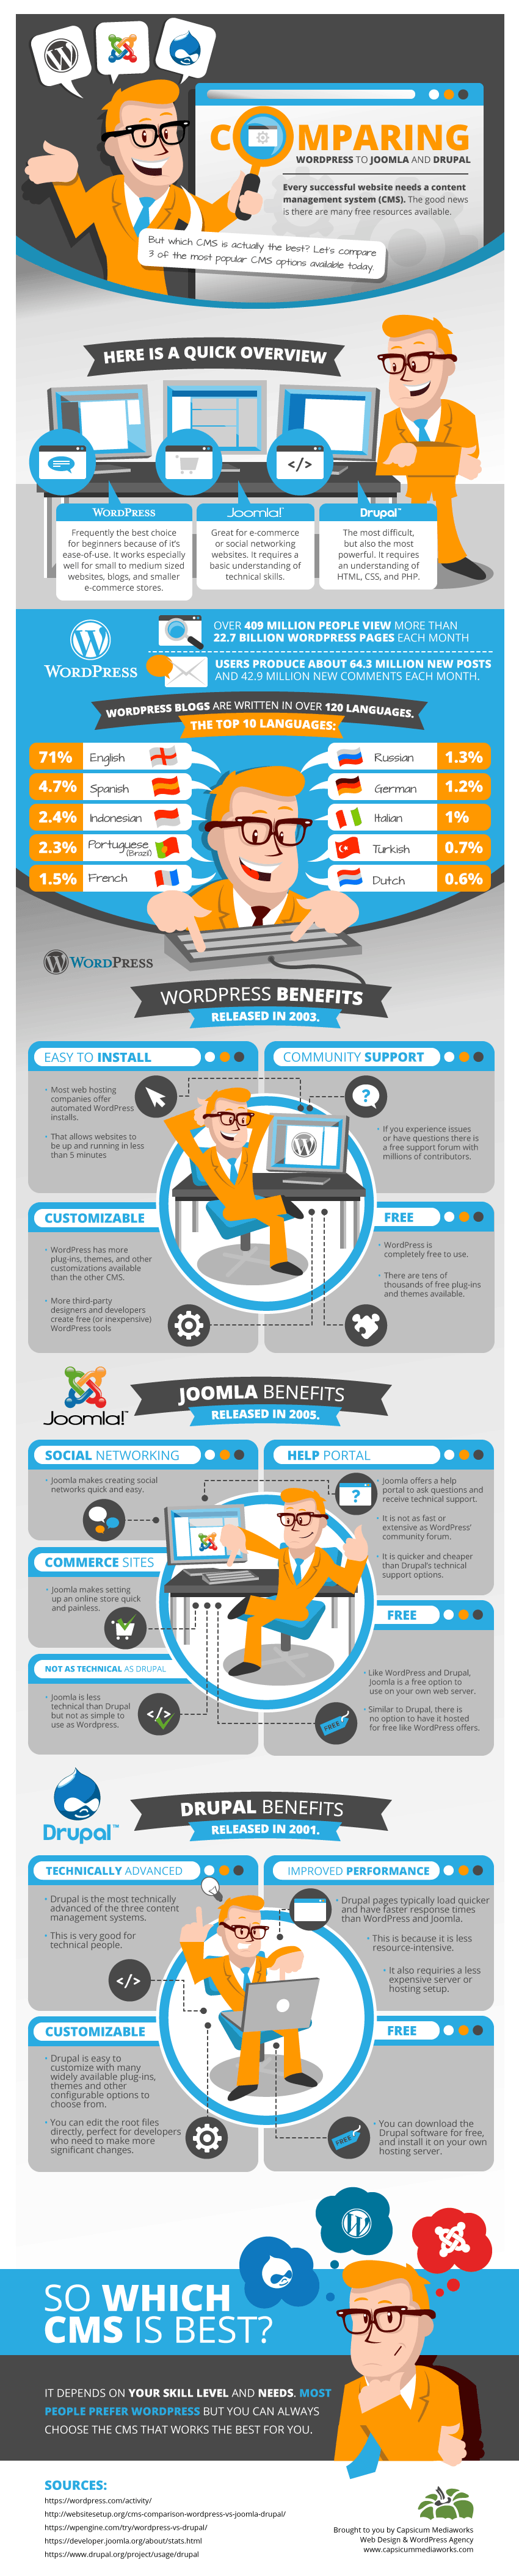 CMS Comparison WordPress vs Joomla vs Drupal - Which is Better Infographic